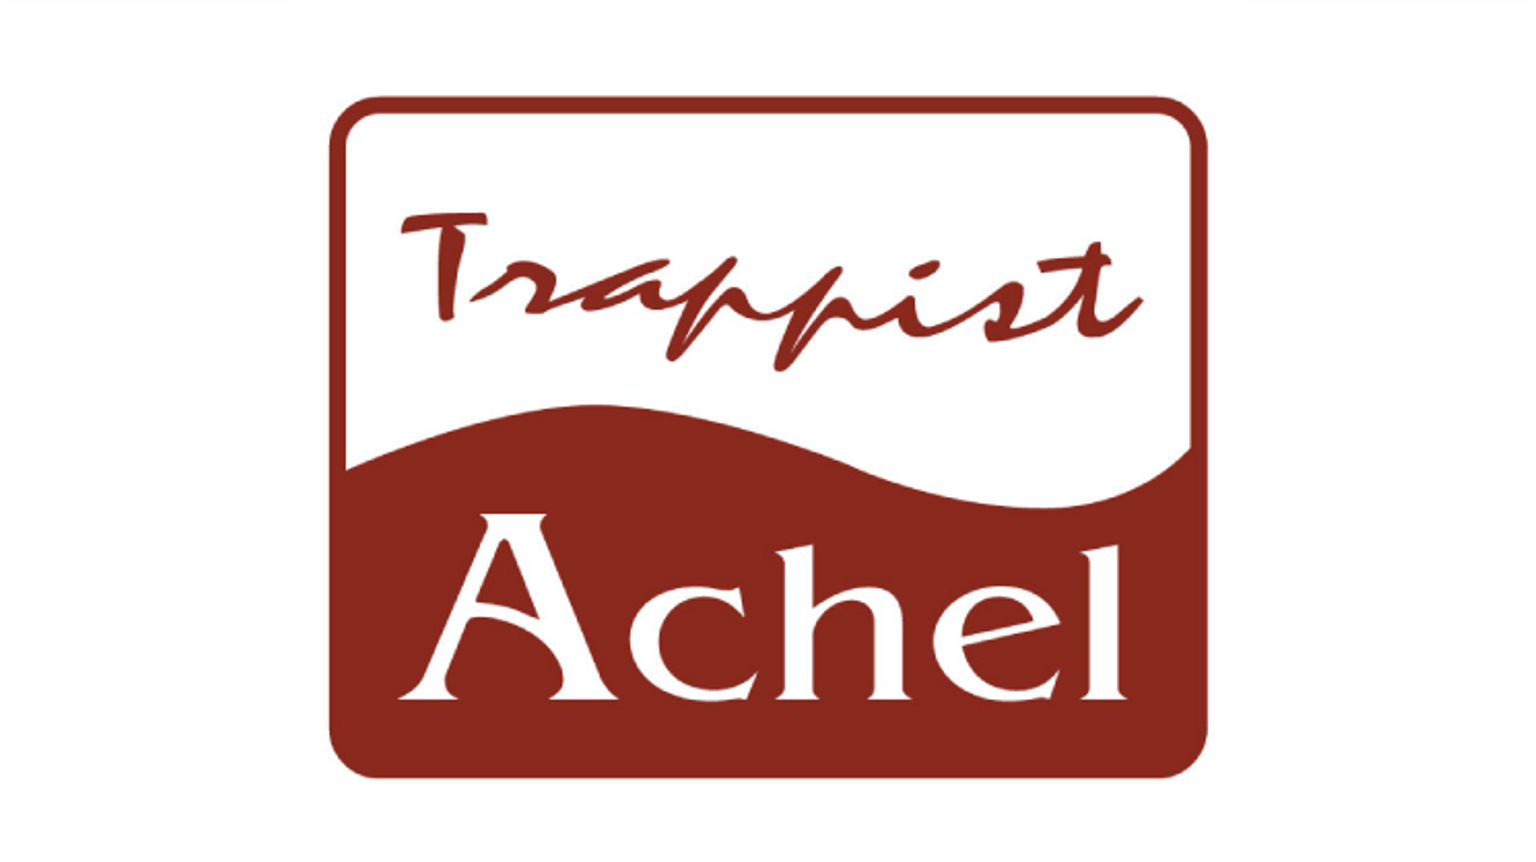 thumbnail for blog article named: Achel, una birra Trappista belga